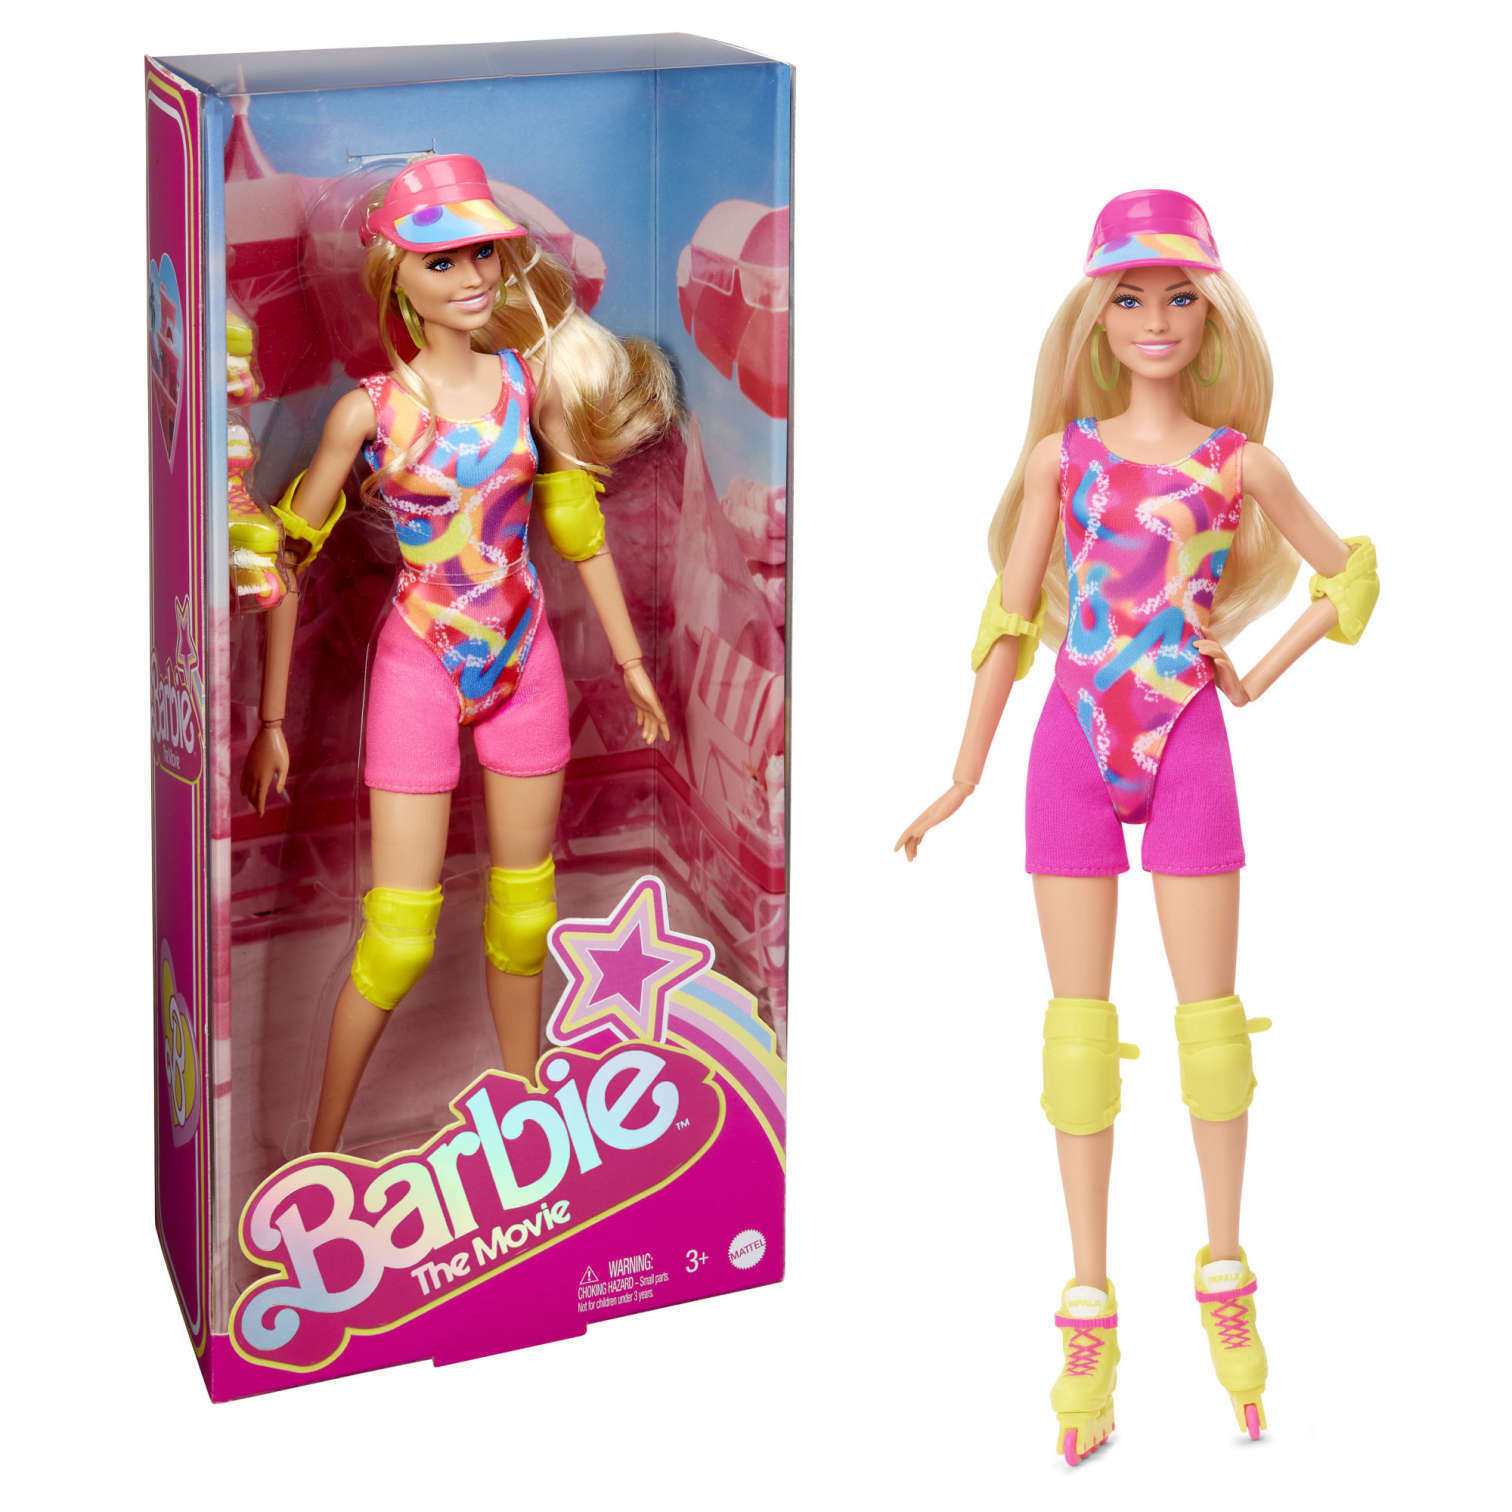 Barbie Margot Robbie as Barbie in Inline Skating Outfit - HRB04